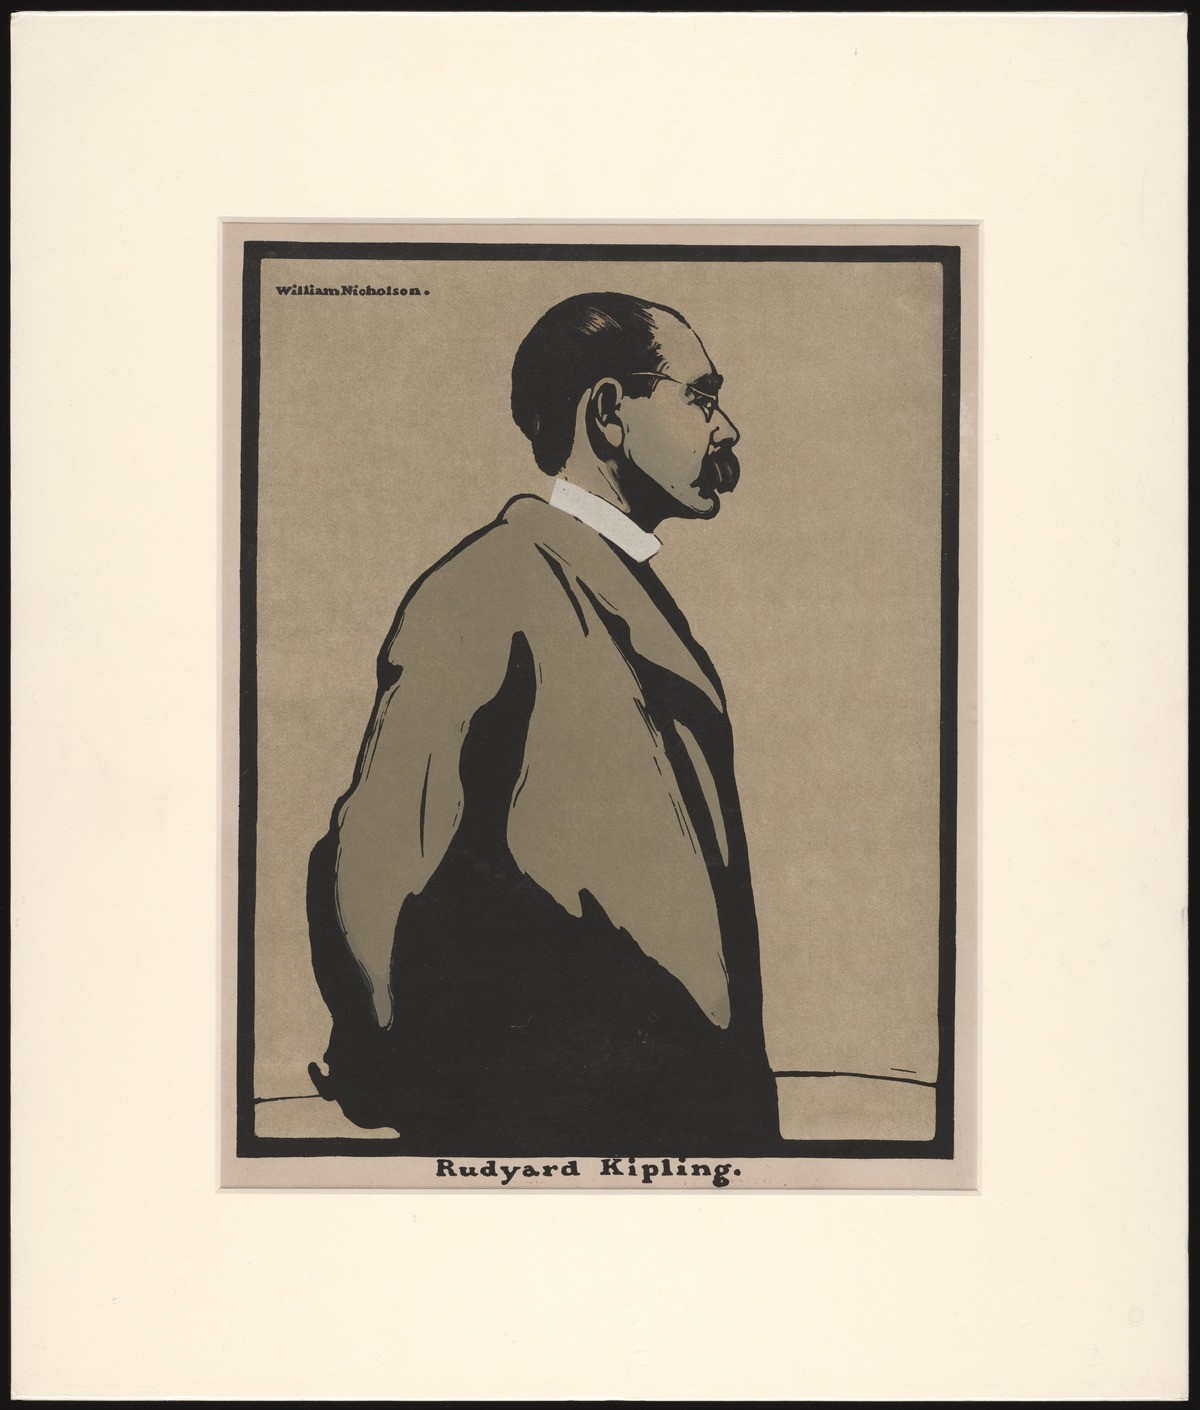 Rudyard Kipling, drawing by Sir William Nicholson, 1899.